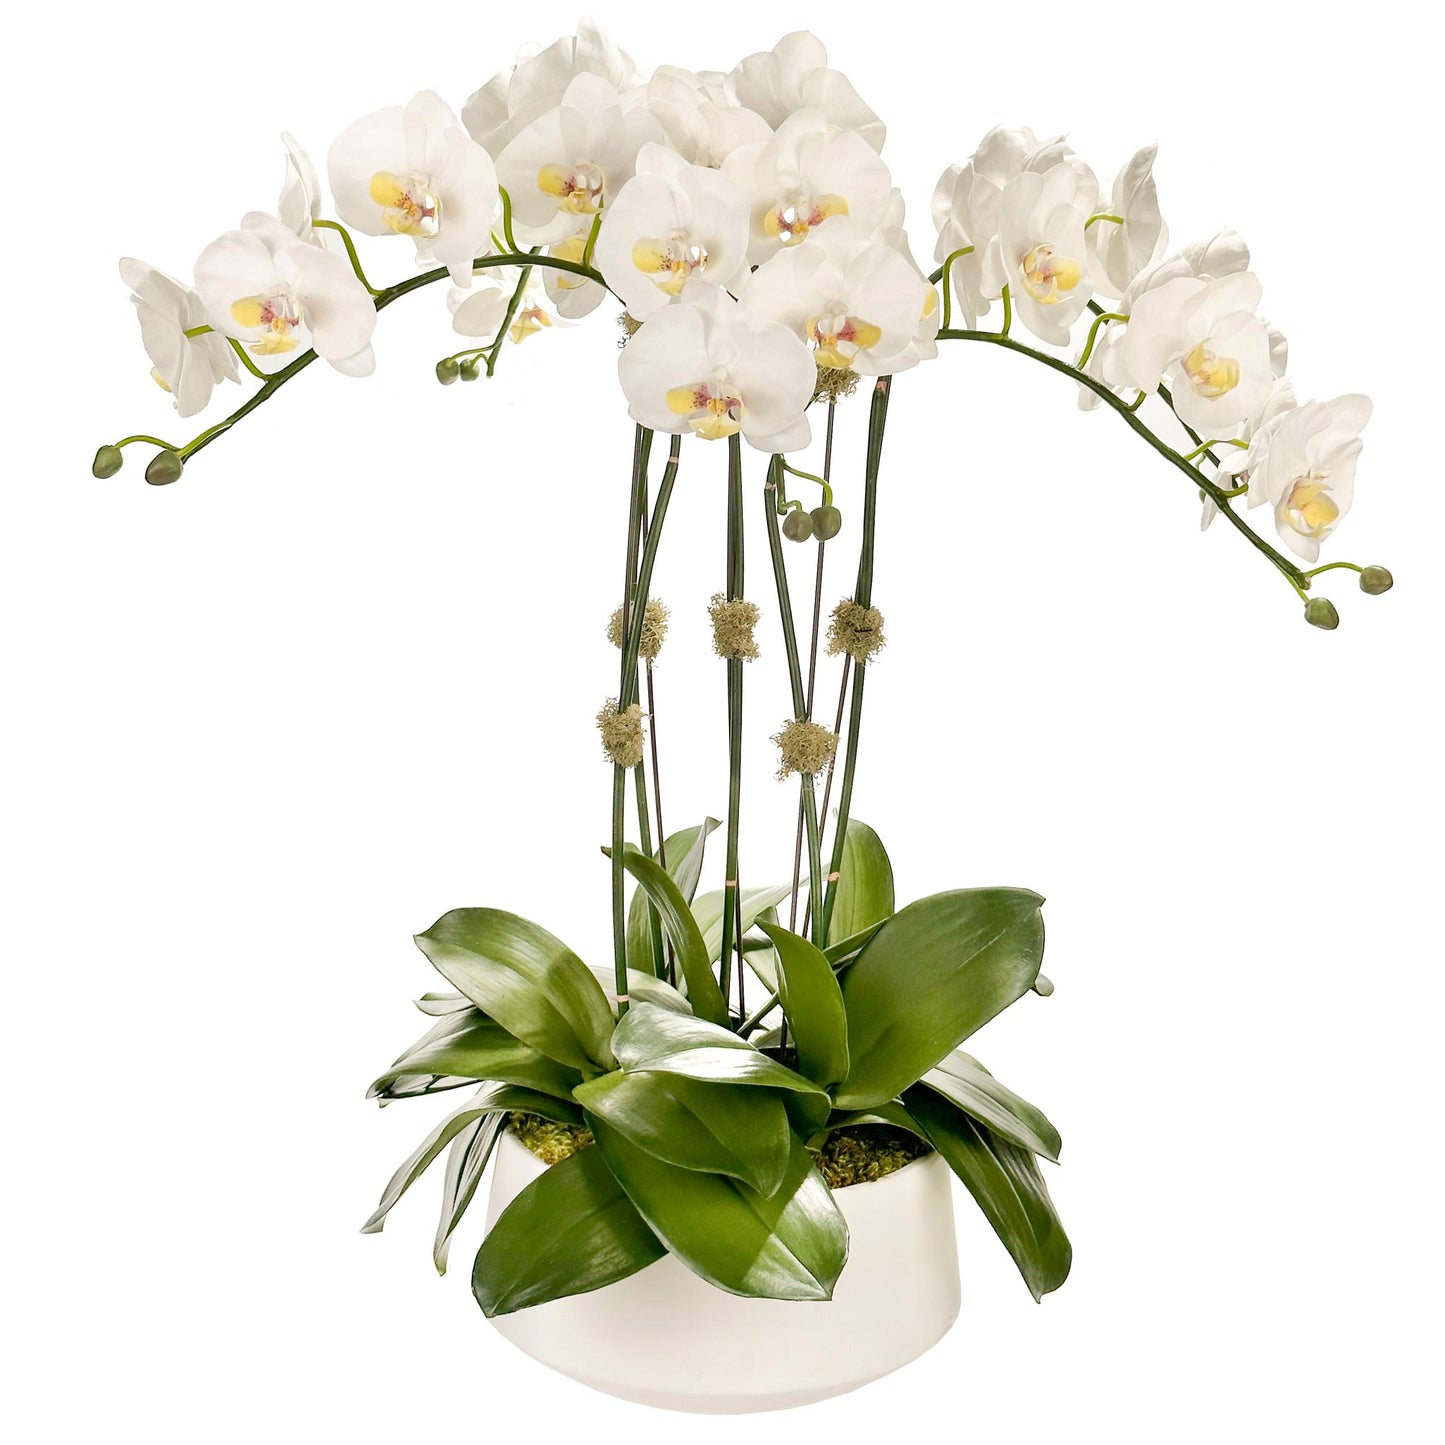 Five Medium Orchids in 10" Contour Bowl